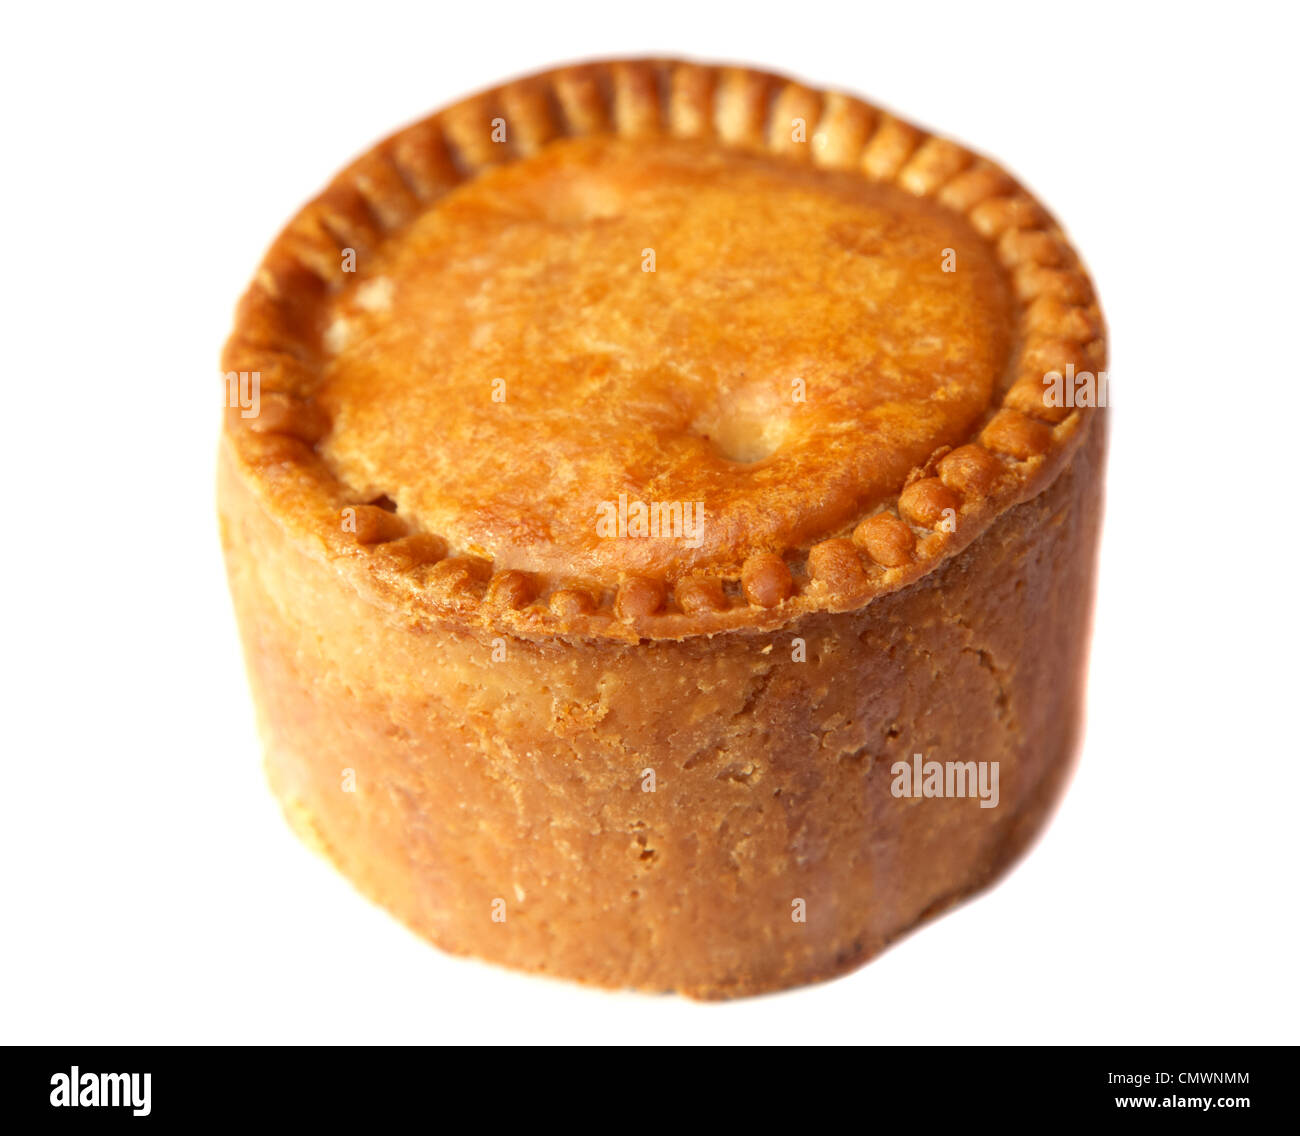 whole british pork pie on white background studio cut out Stock Photo